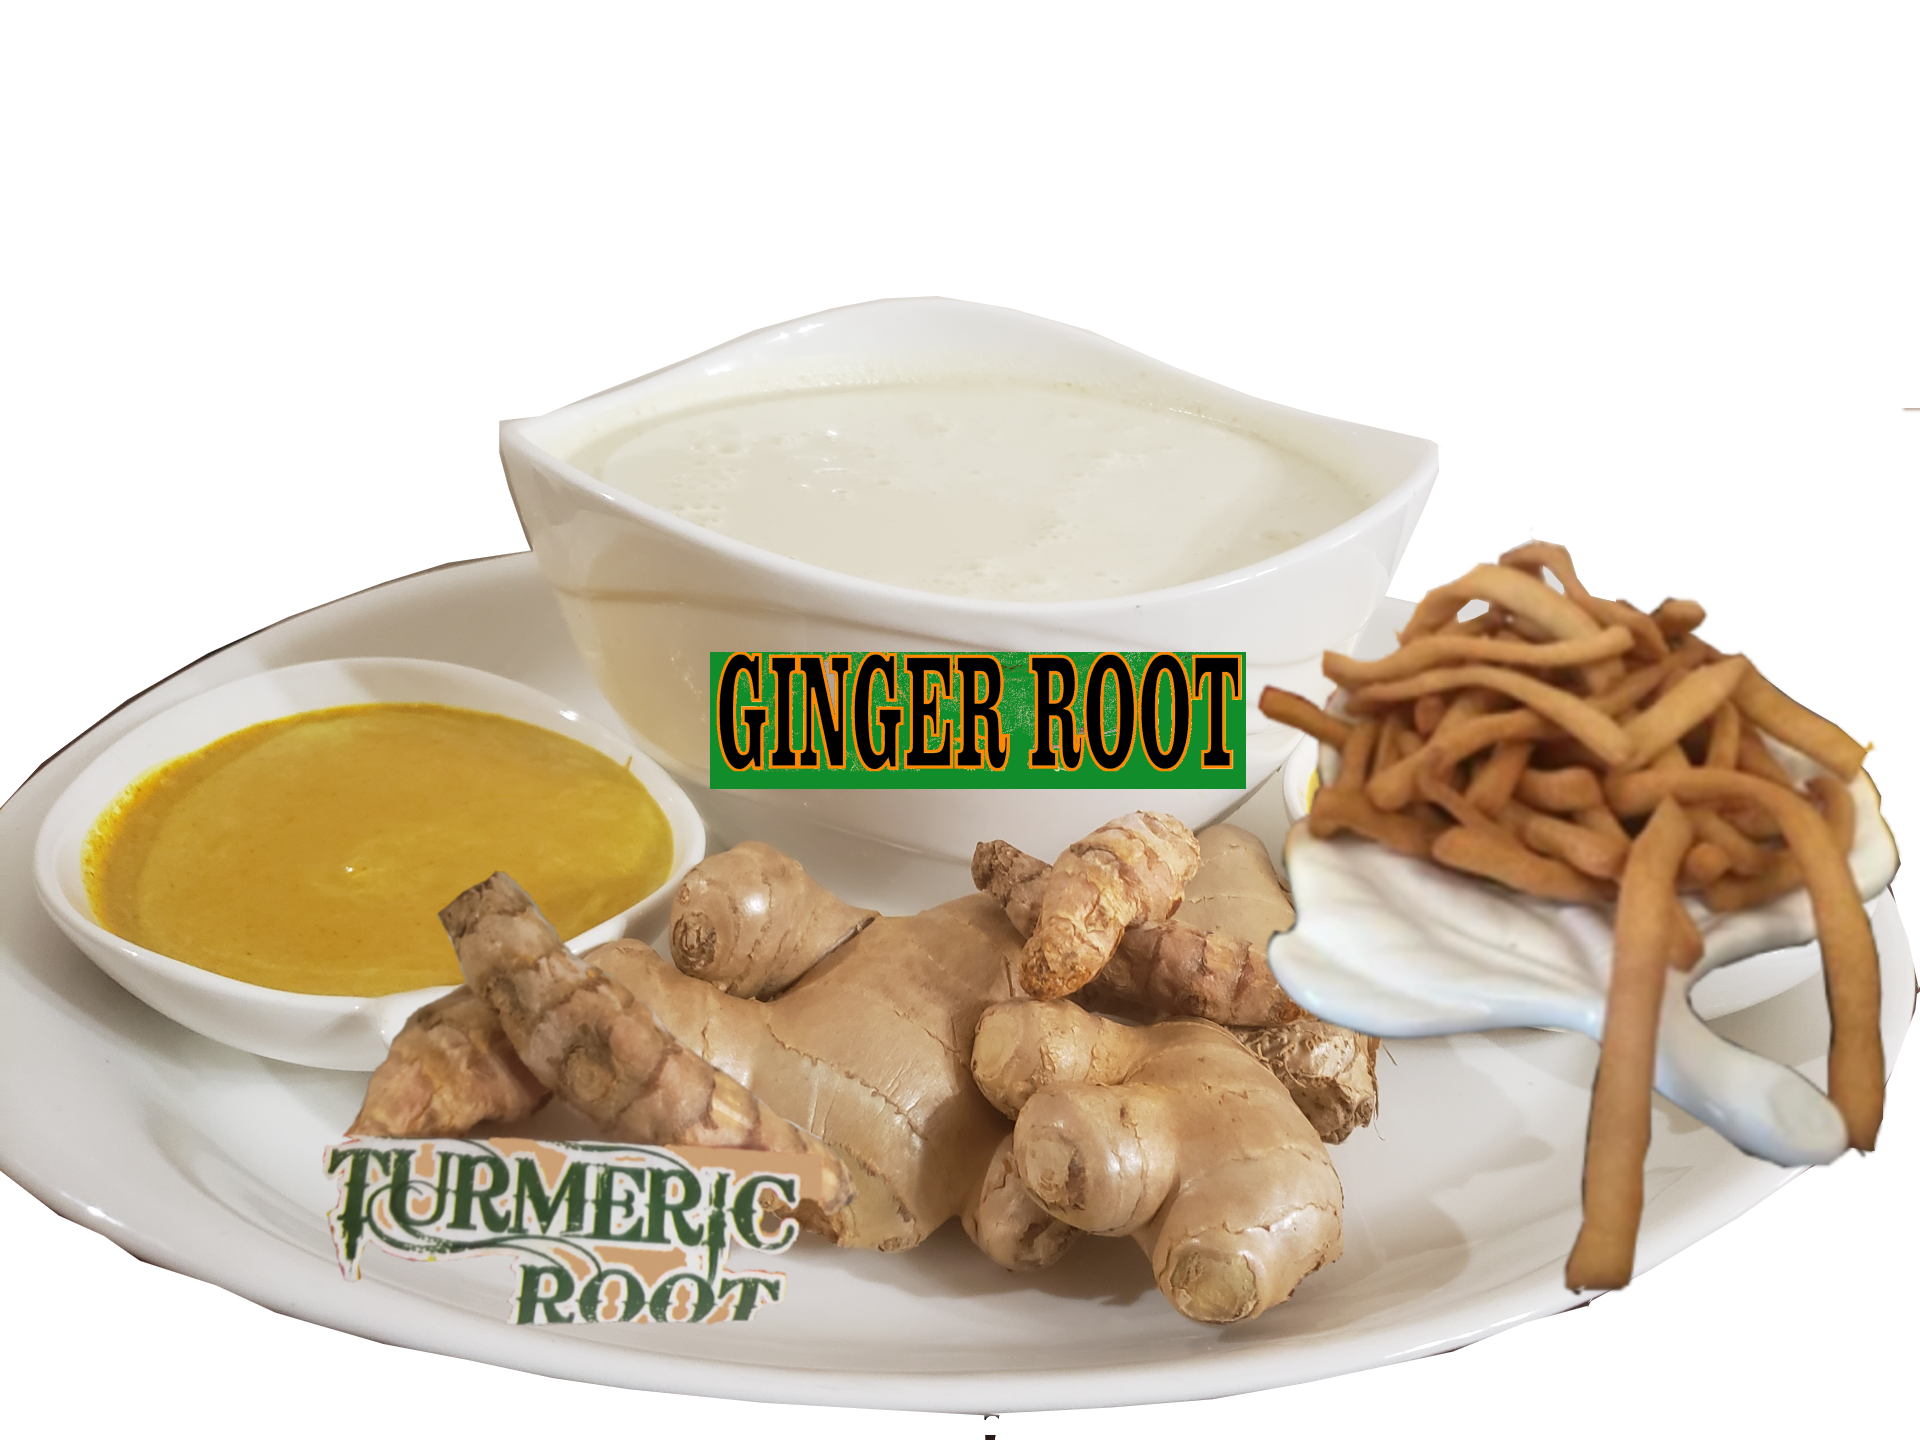 Ginger Turmeric